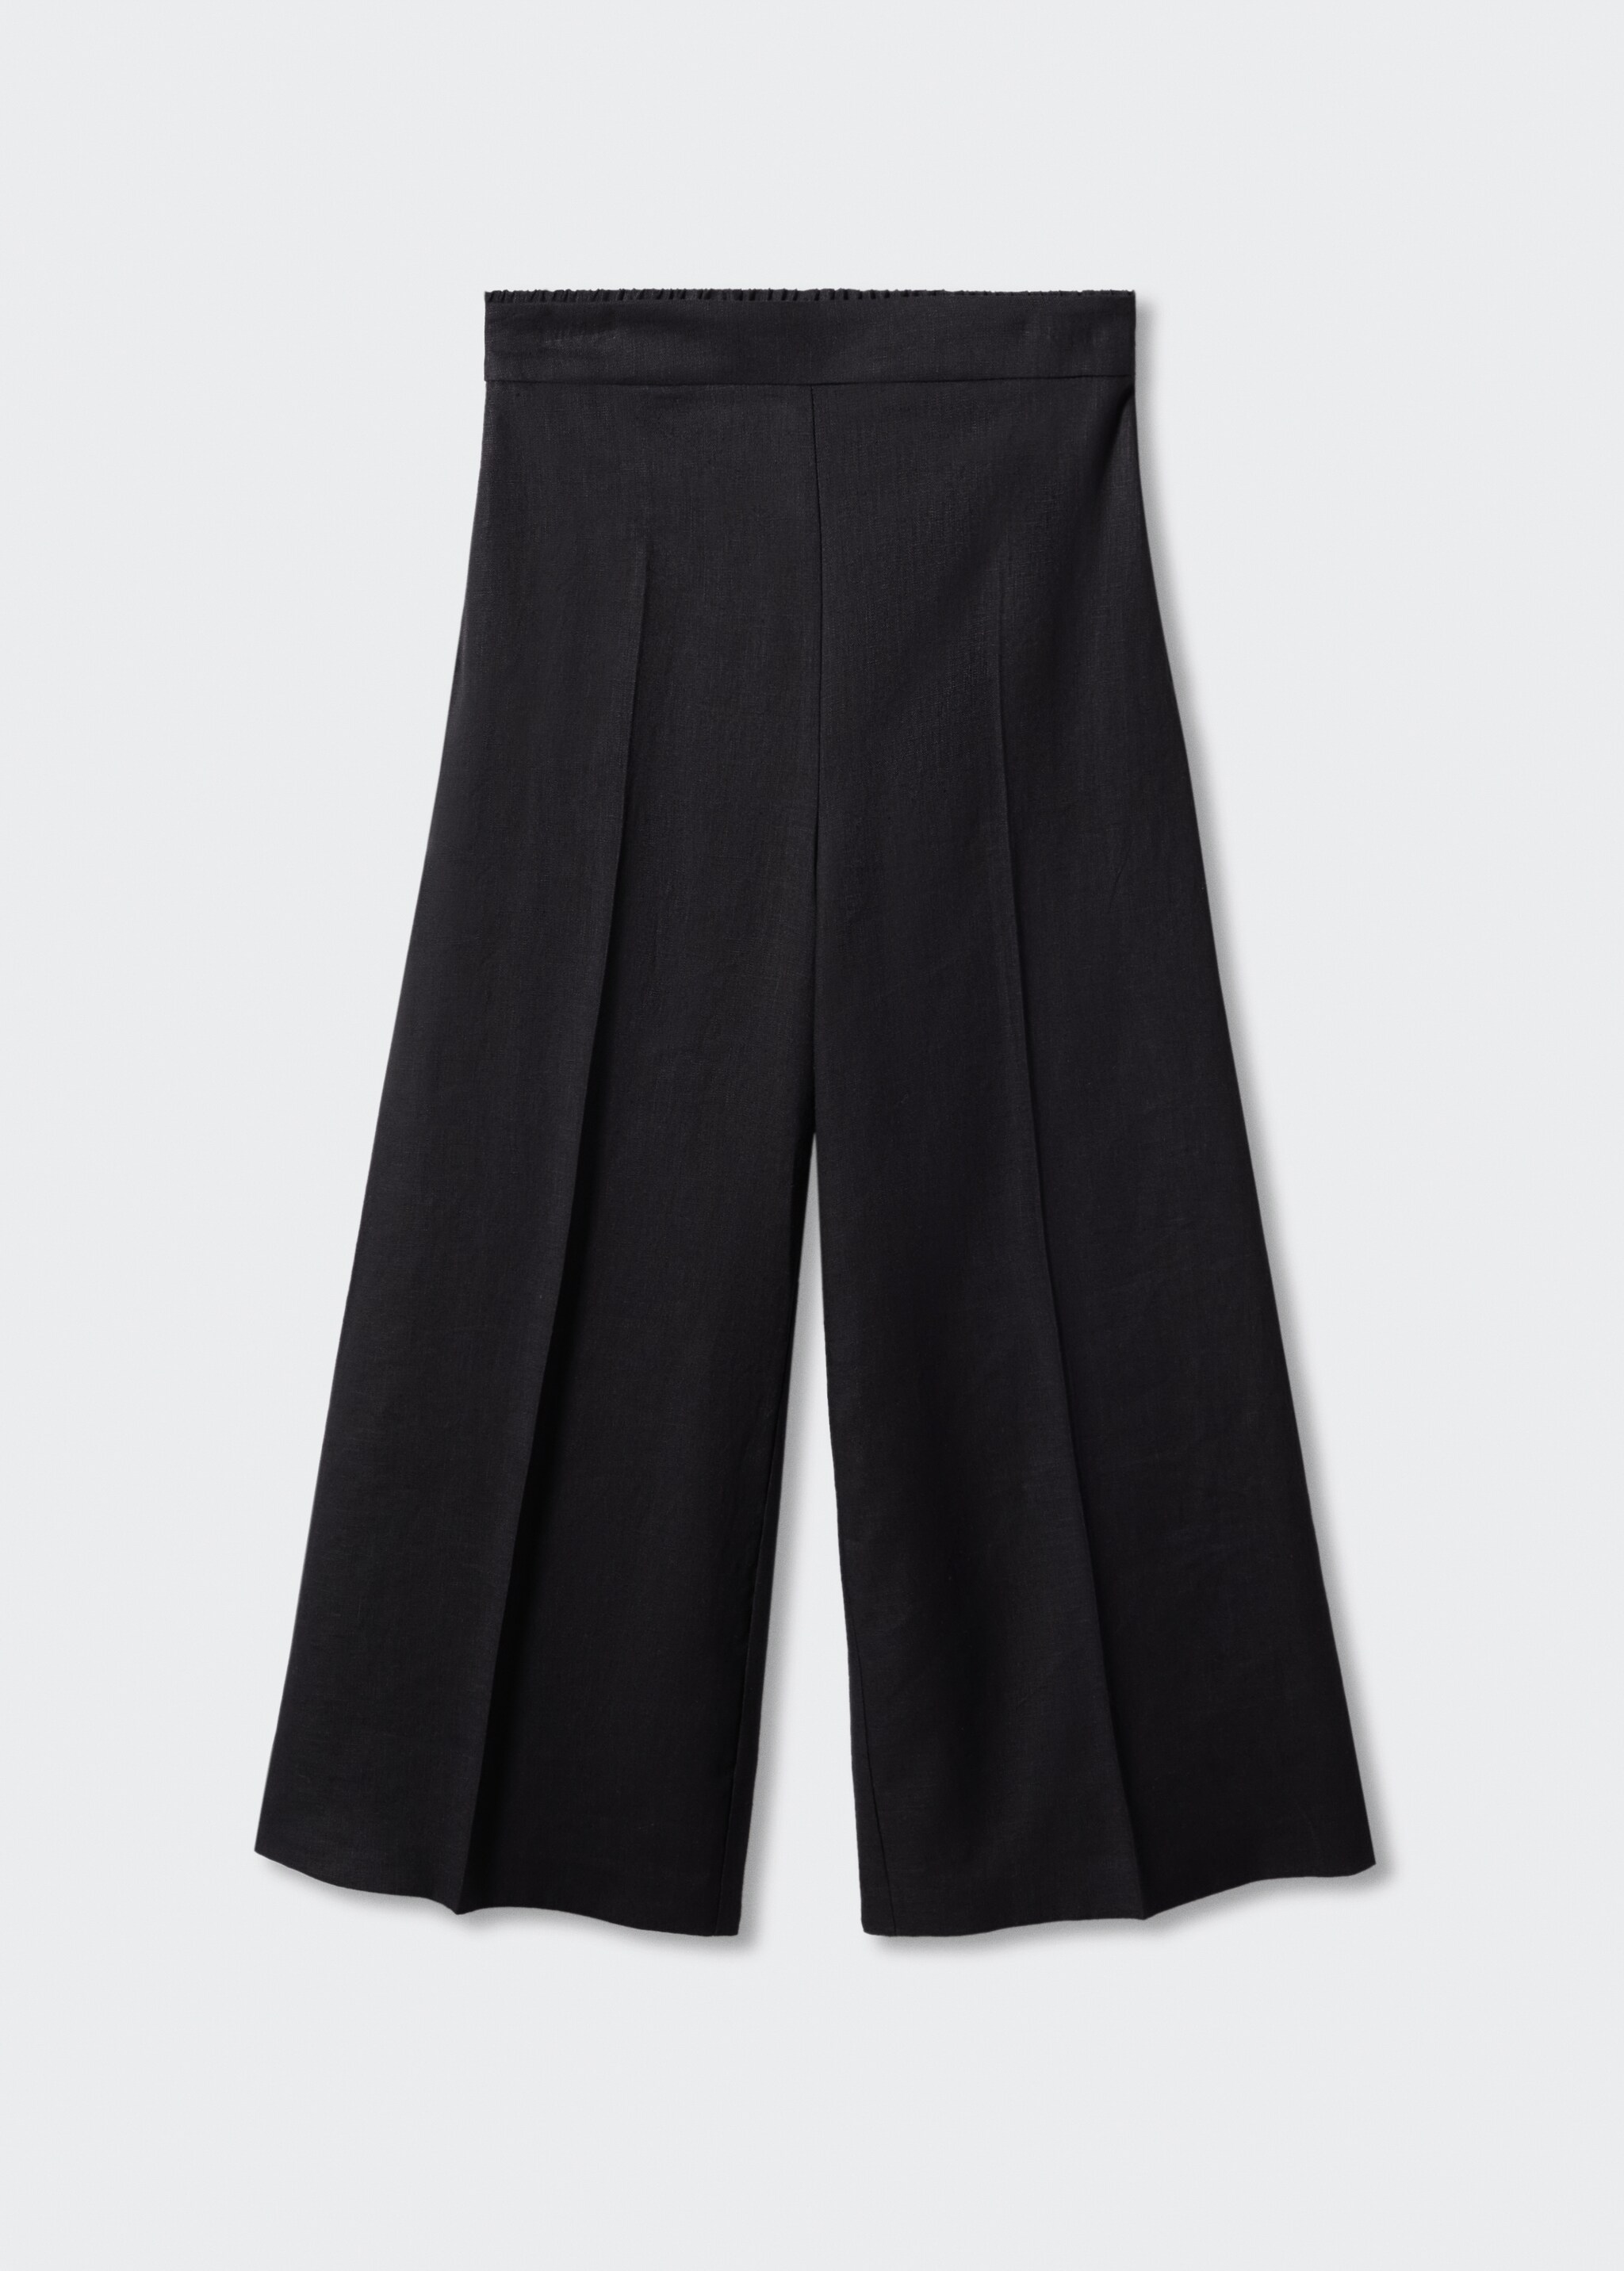 100% linen culotte pants  - Article without model